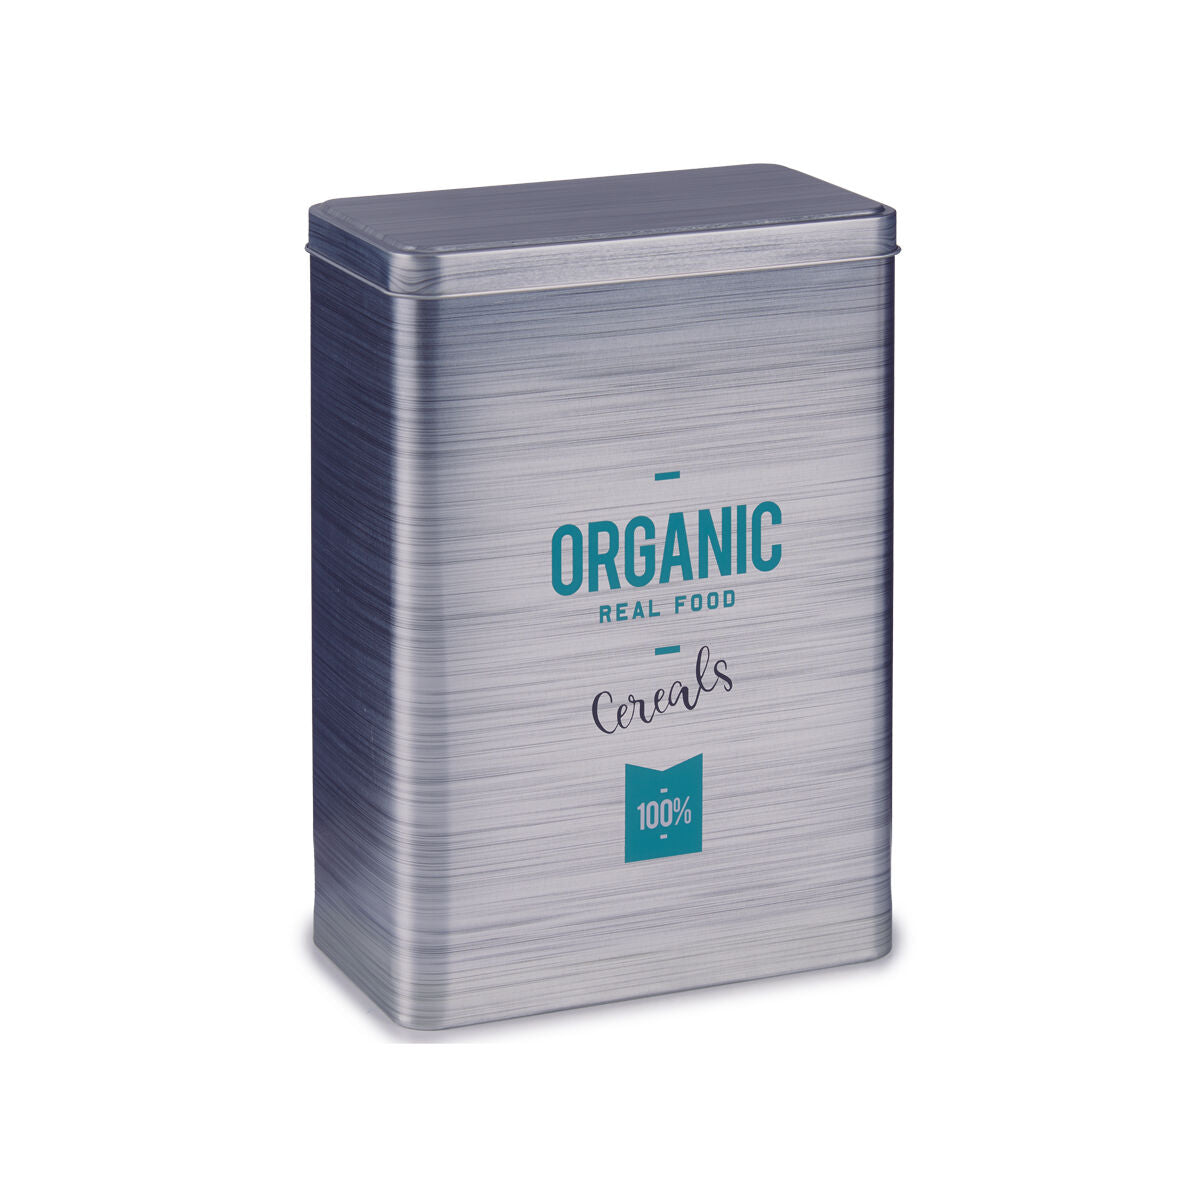 Cornflakes dispenser Organic 12 x 24,7 x 17,6 cm (12 Stuks)